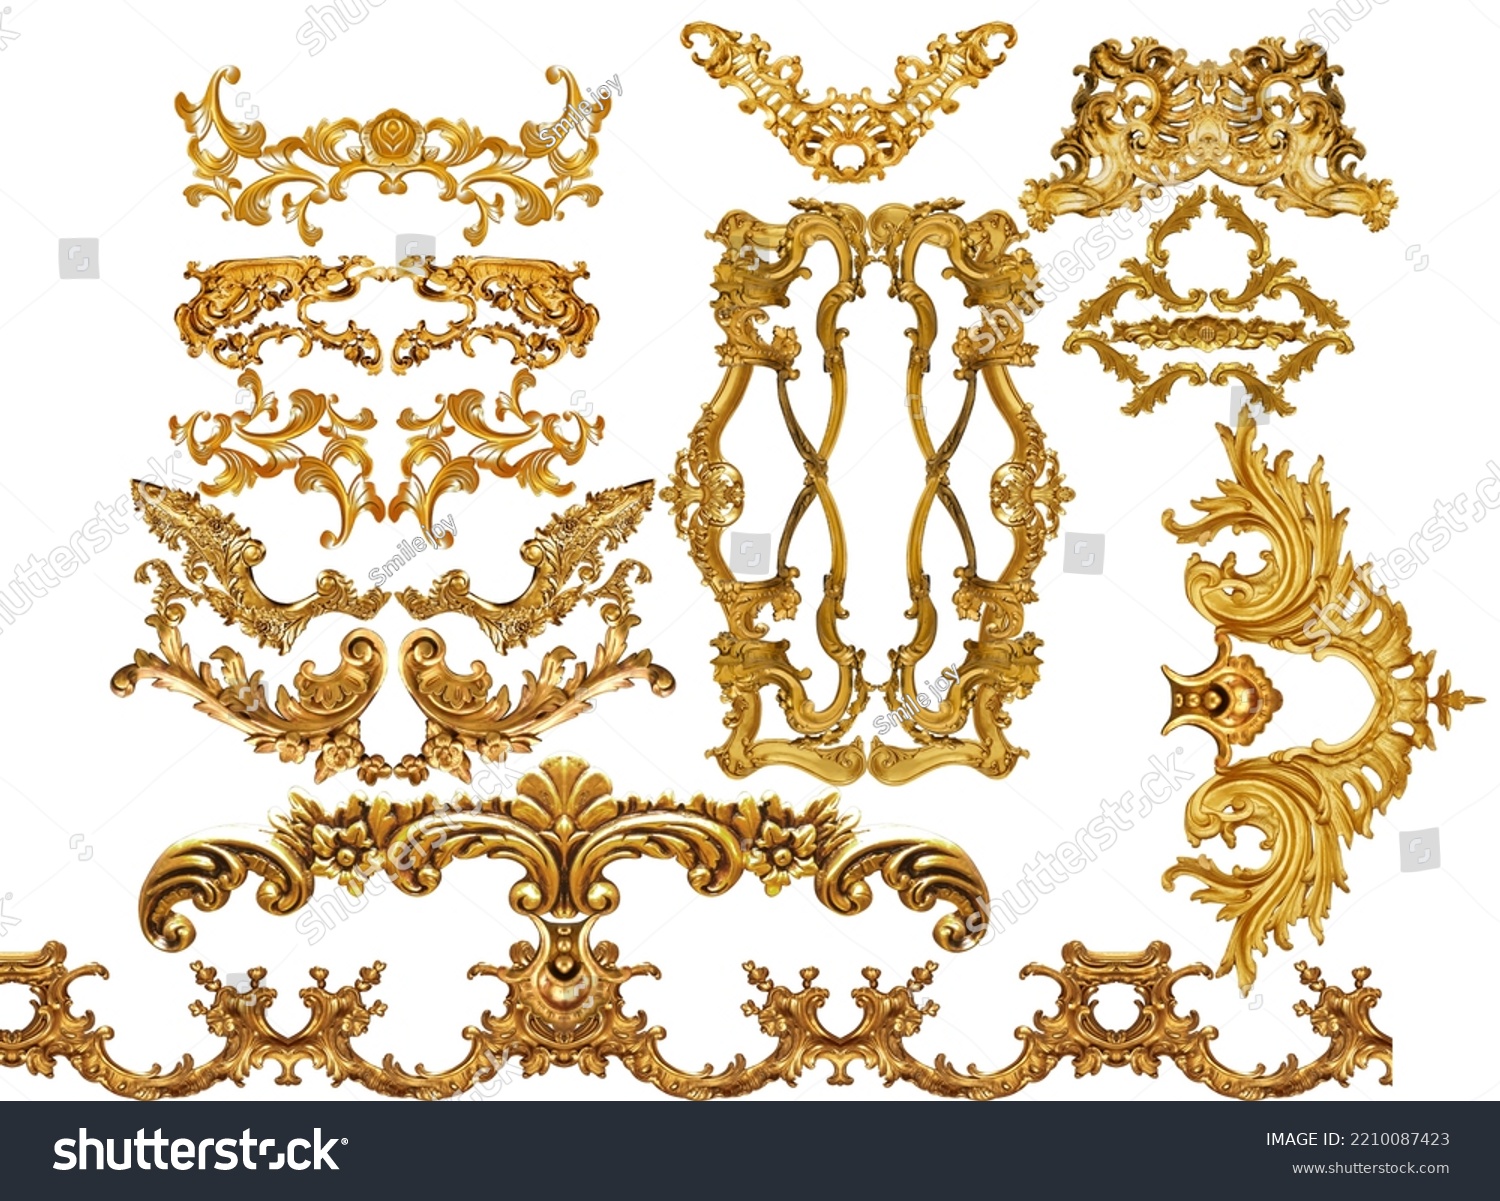 Golden baroque and  ornament elements
 #2210087423